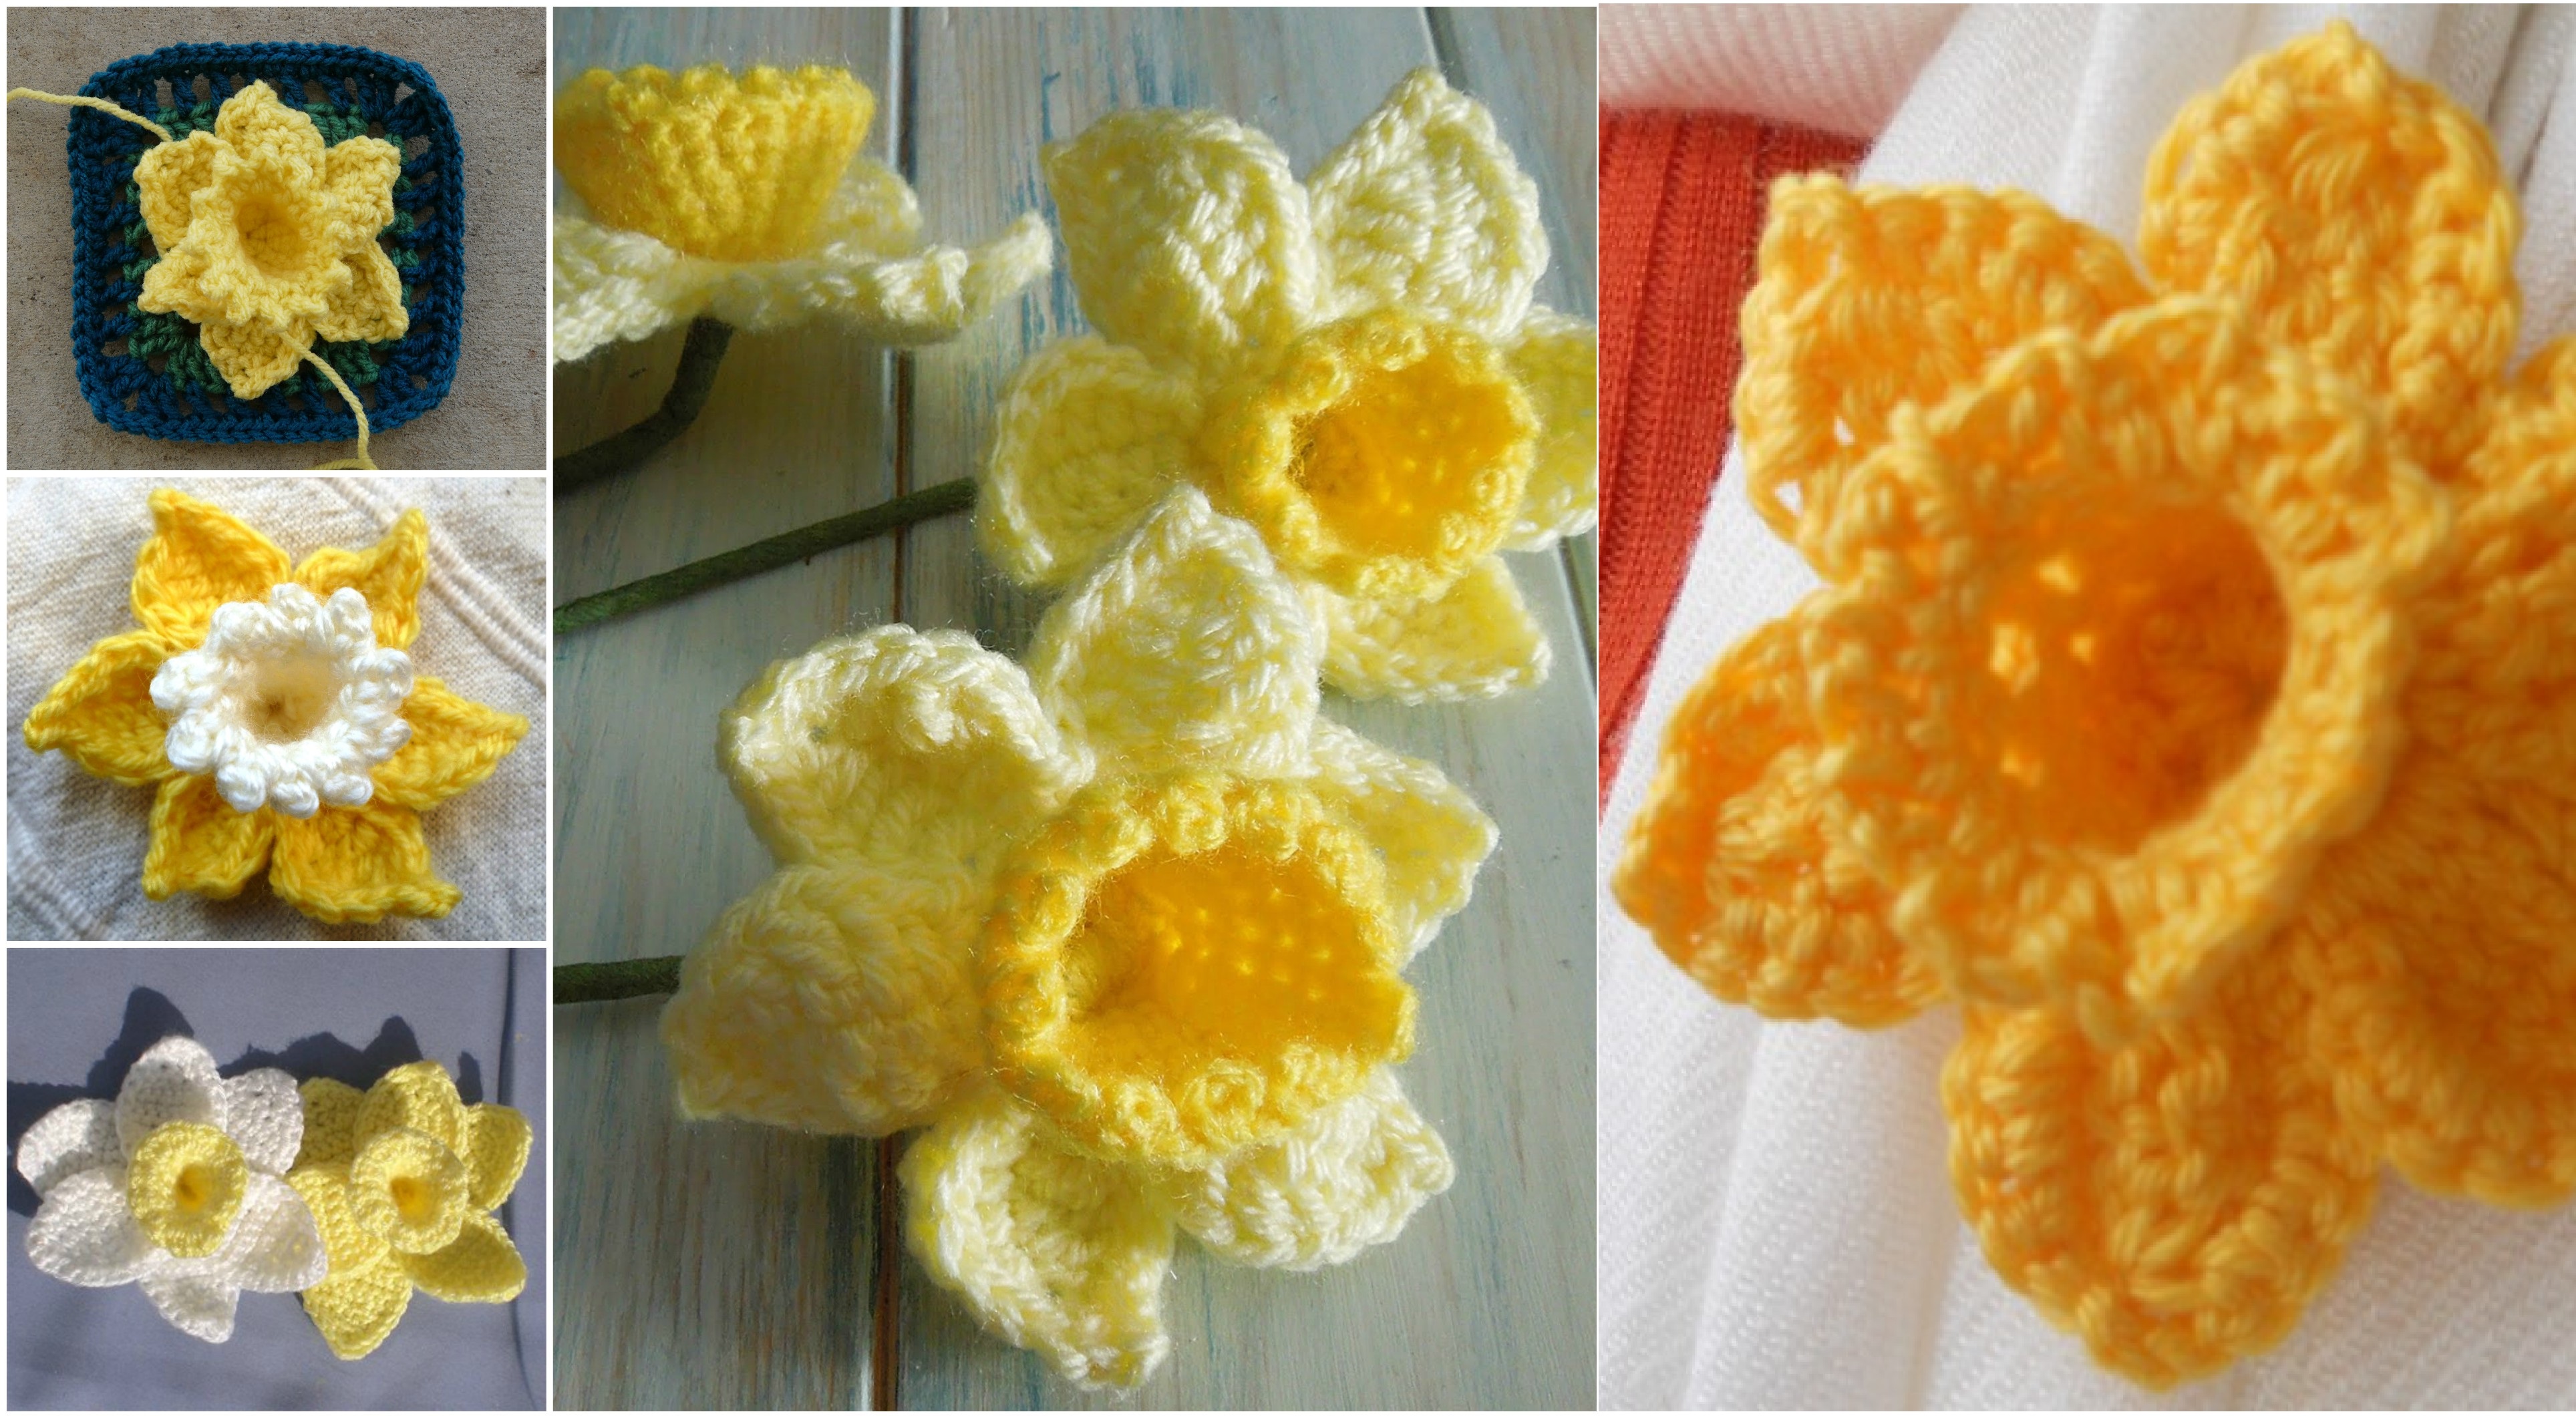 Crochet Daffodil